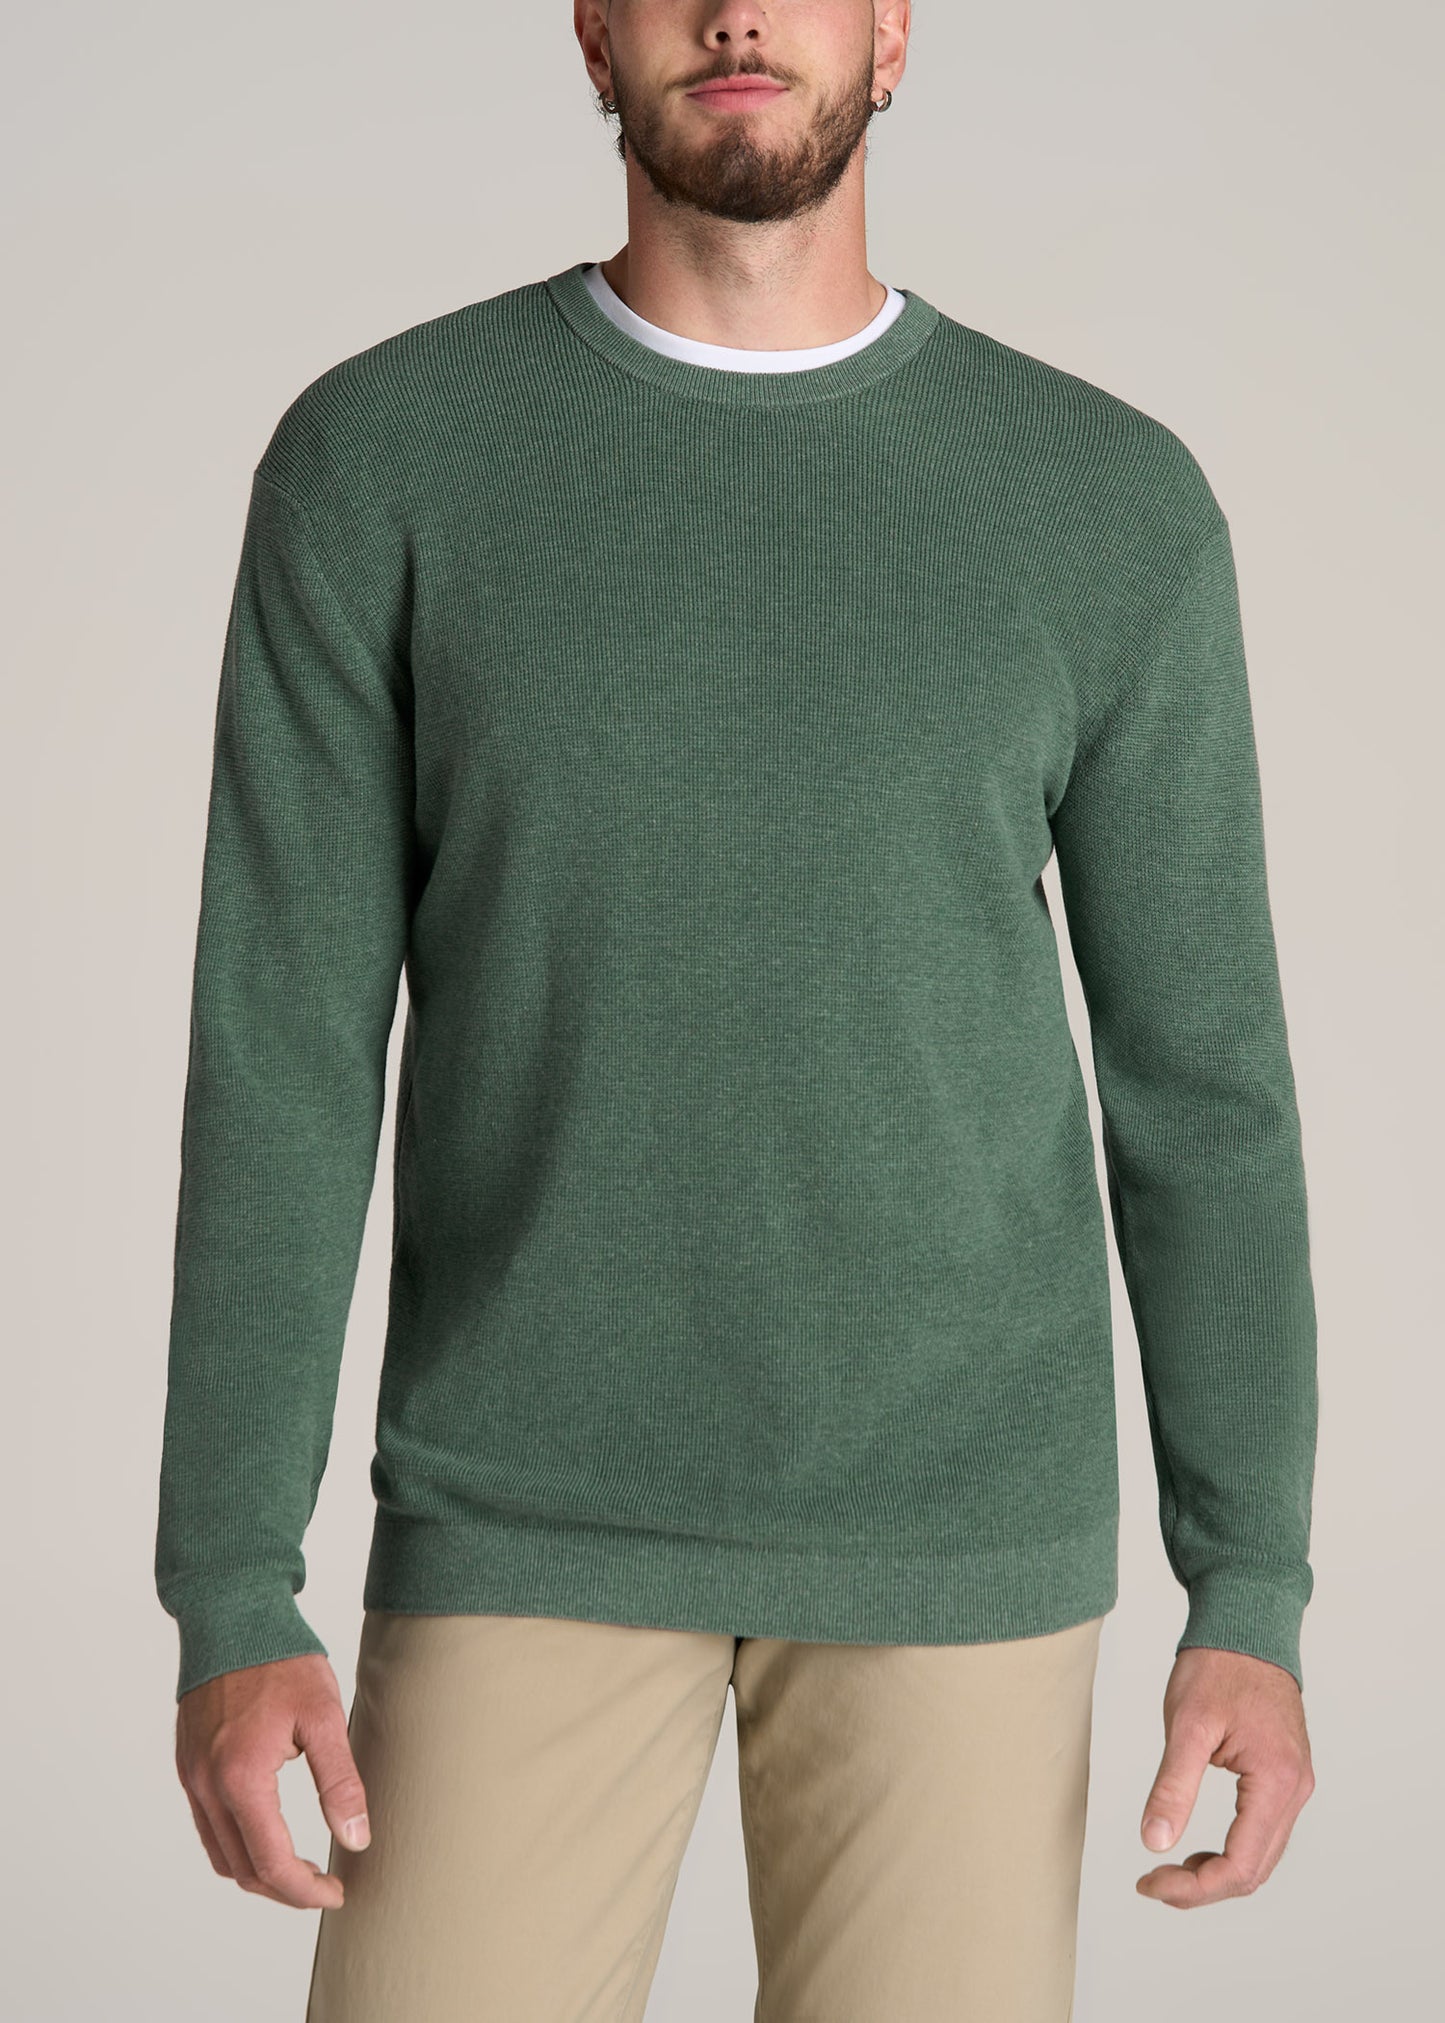 American-Tall-Men-Waffle-Knit-Sweater-Dusty-Spruce-front